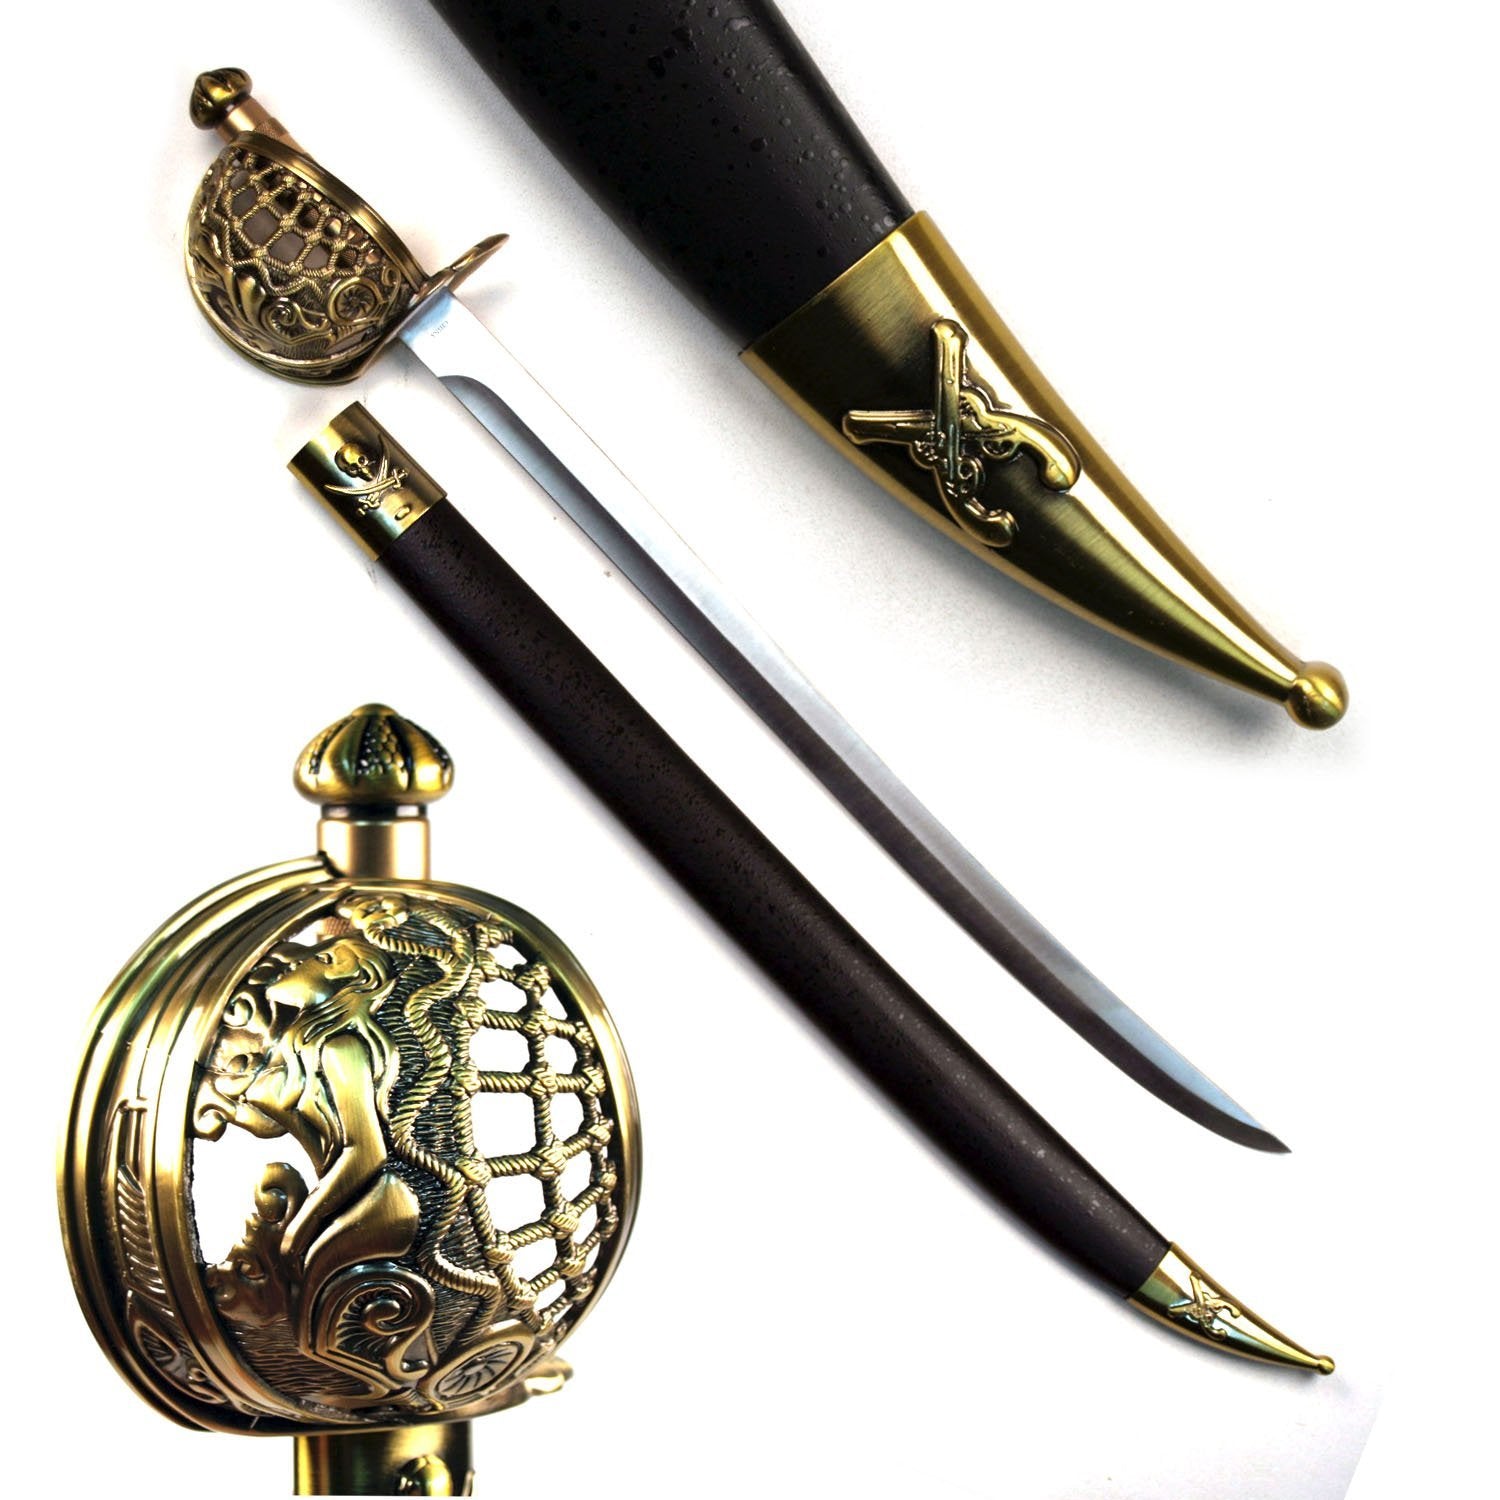  SZCO Supplies Pirate Cutlass Sword : Martial Arts Swords :  Sports & Outdoors